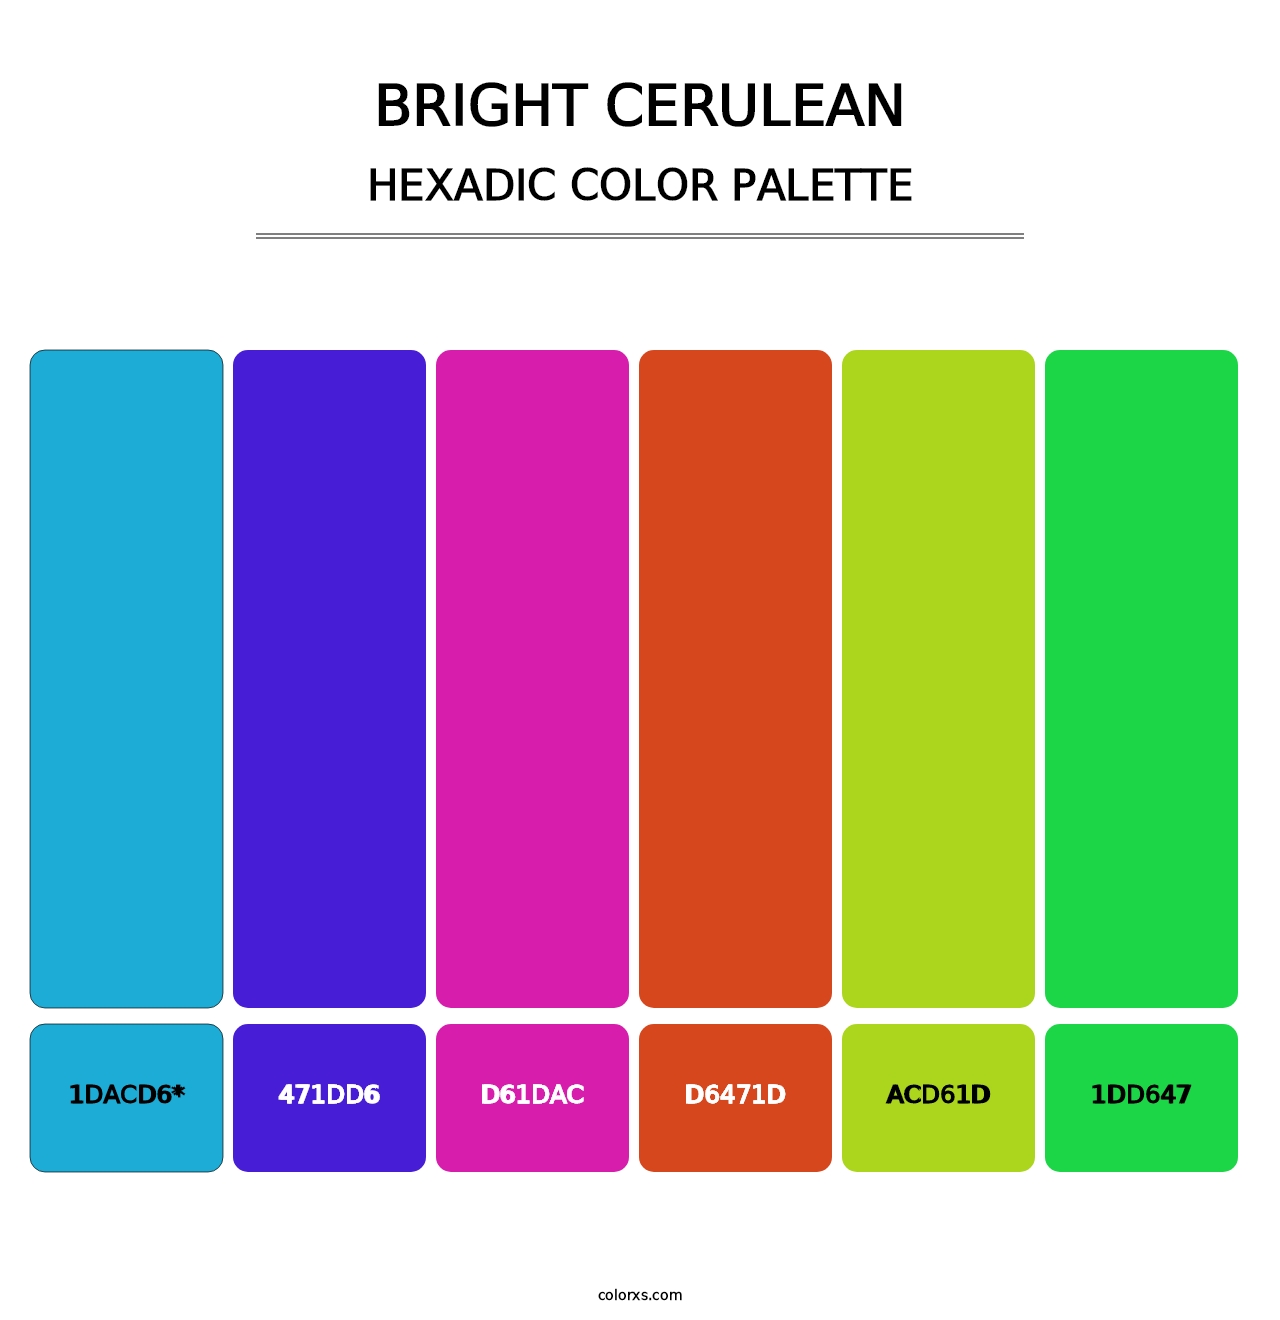 Bright Cerulean - Hexadic Color Palette